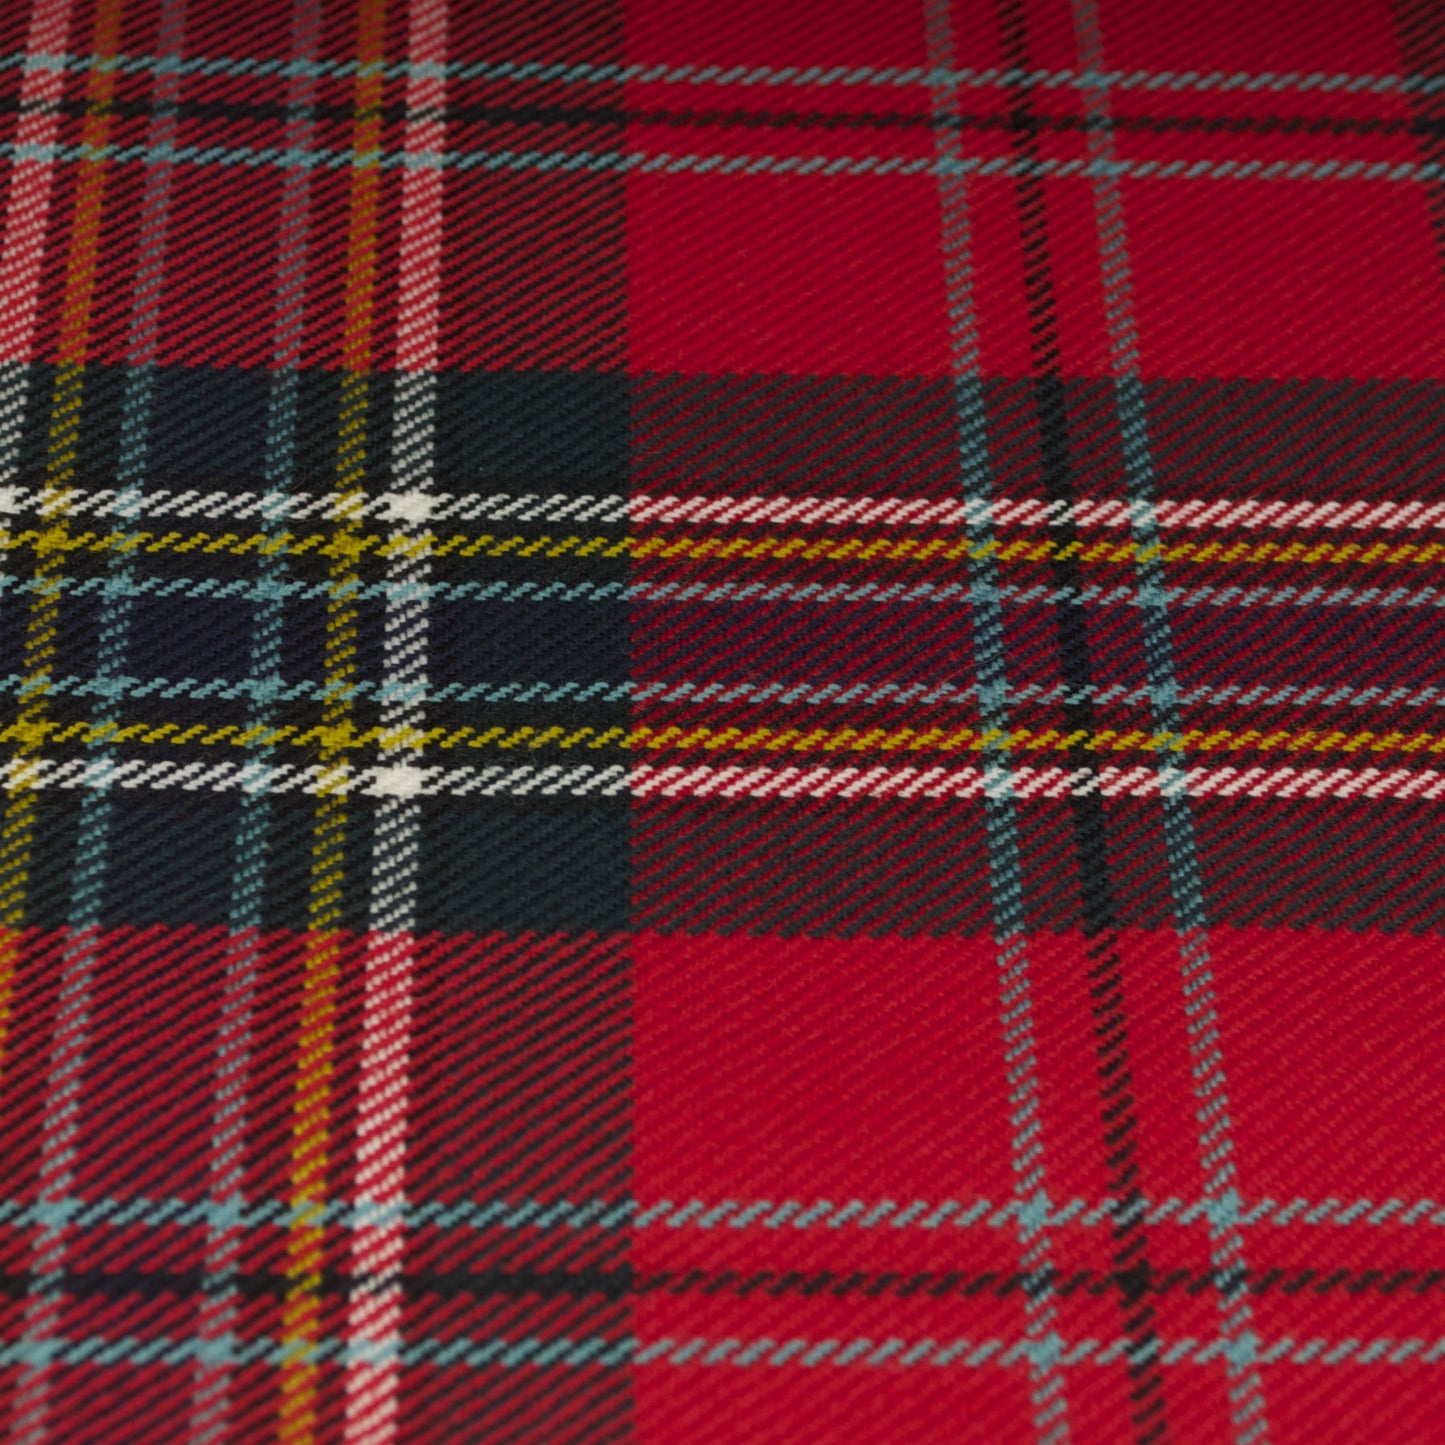 Tartan Fabric - MacLean of Duart - Modern - Red